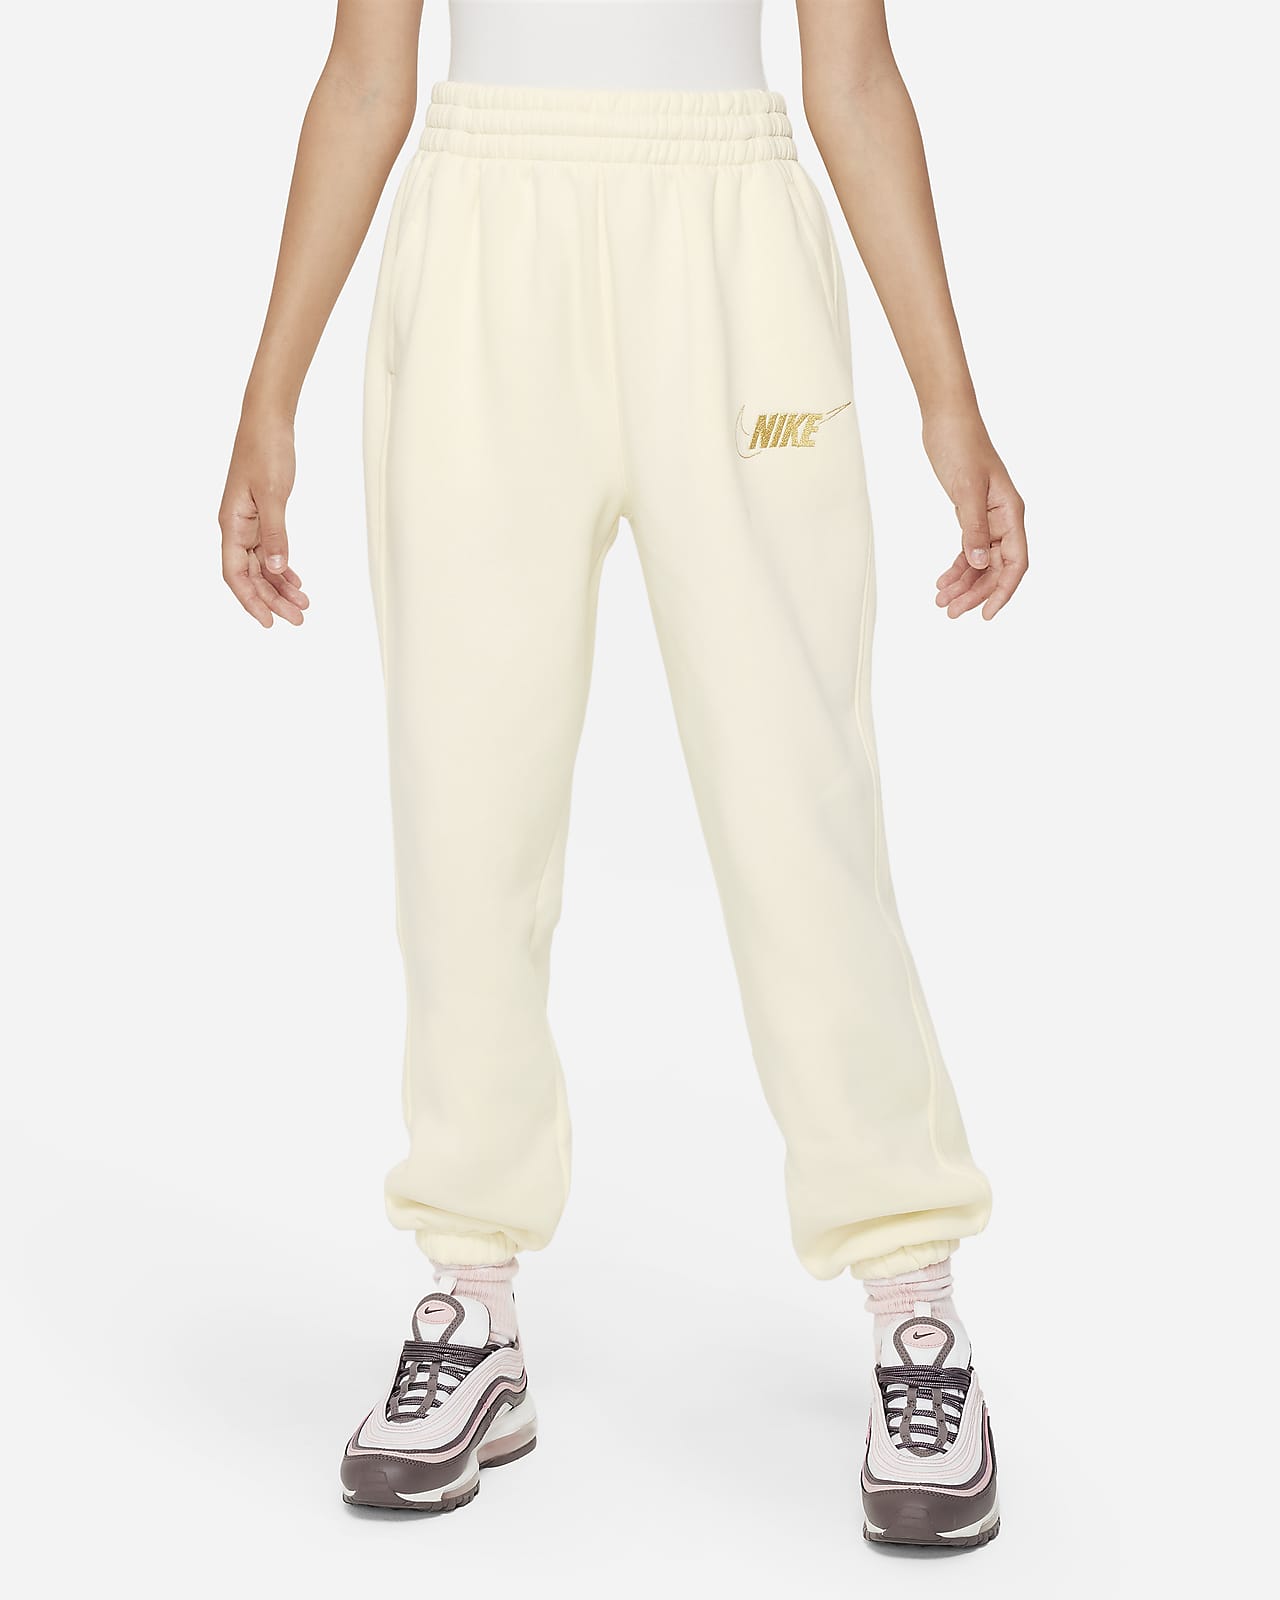 Girls Joggers & Sweatpants. Nike CA